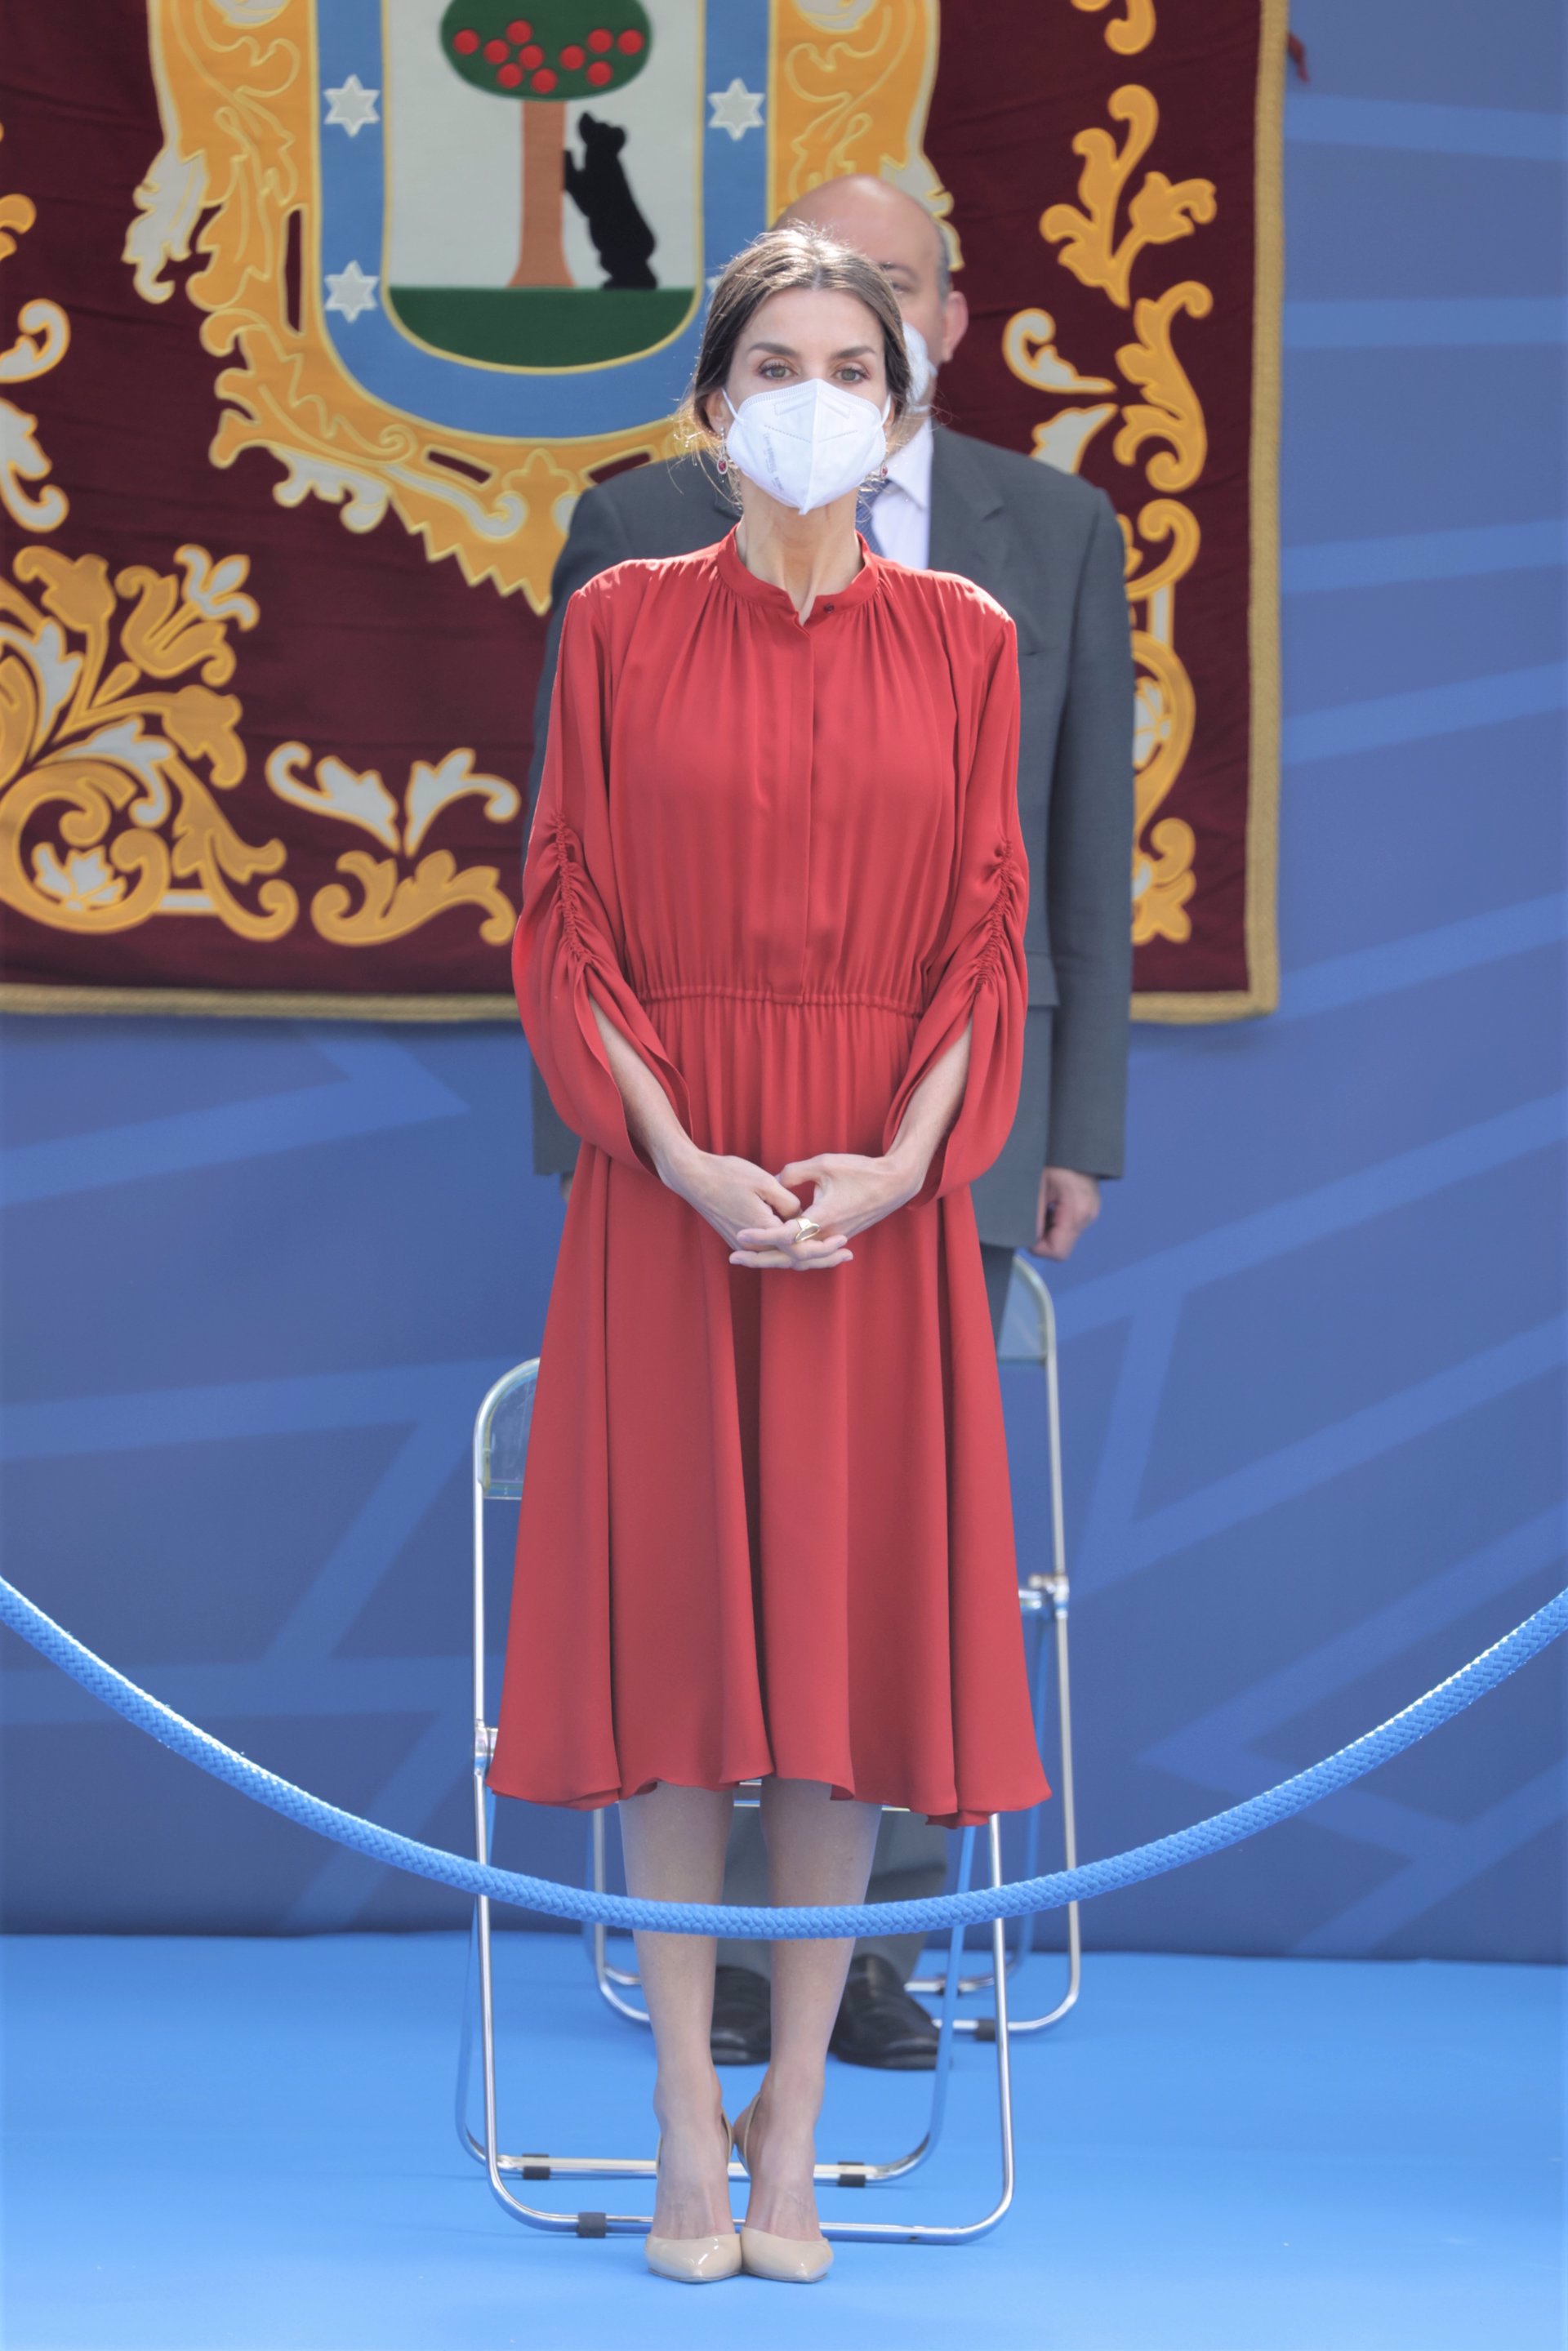 La Reina Letizia, espectacular en rojo